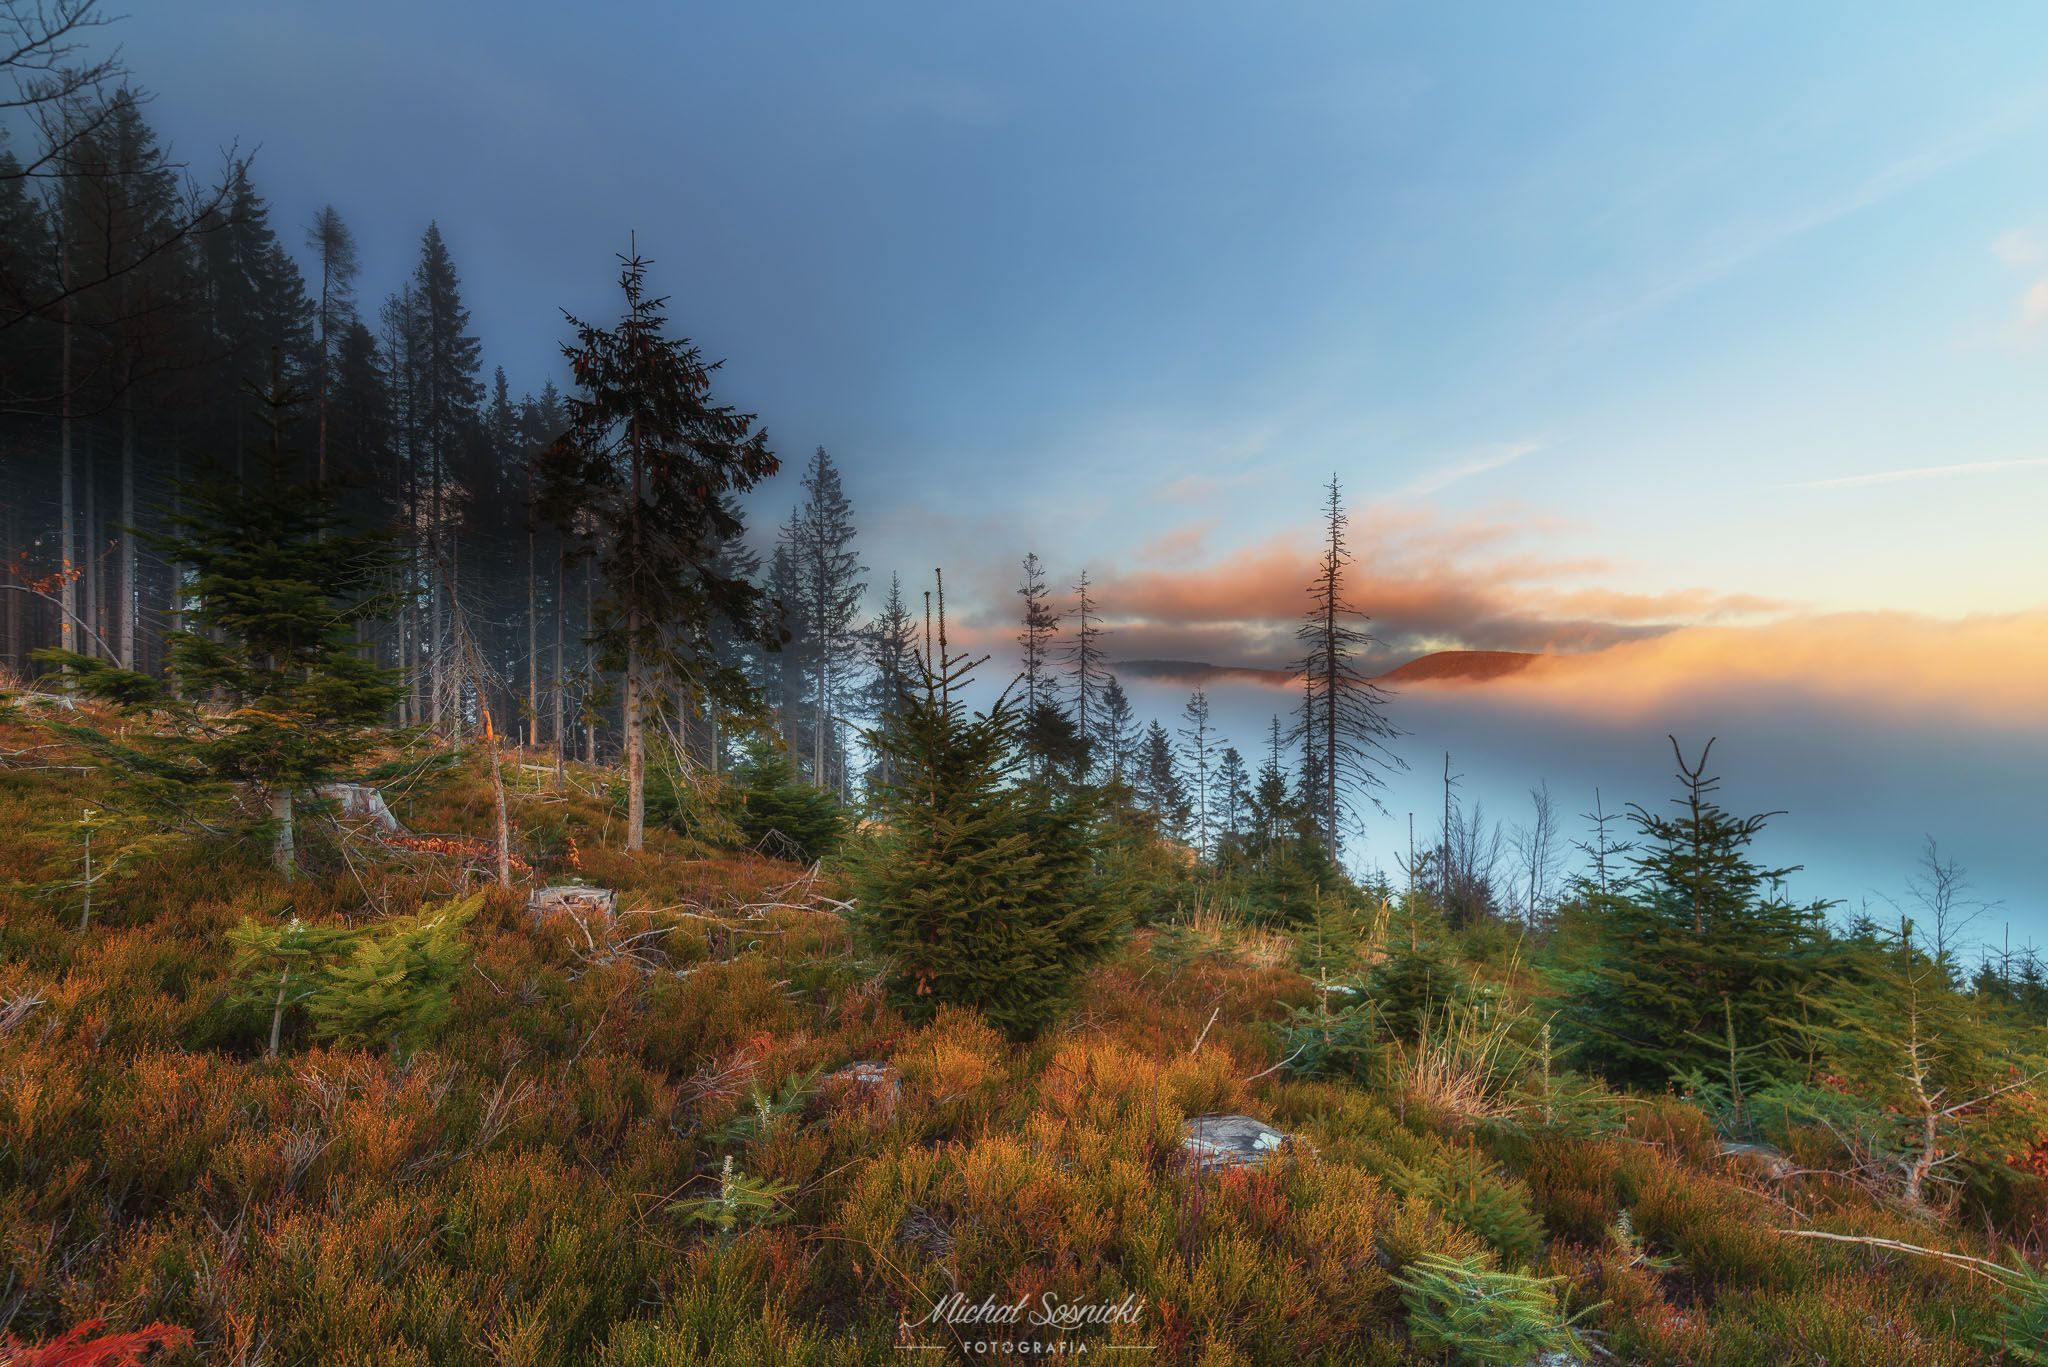 #poland #mountains #benro #benq #pentax #tree #nature #best #sky #trees #clouds #colors, Michał Sośnicki